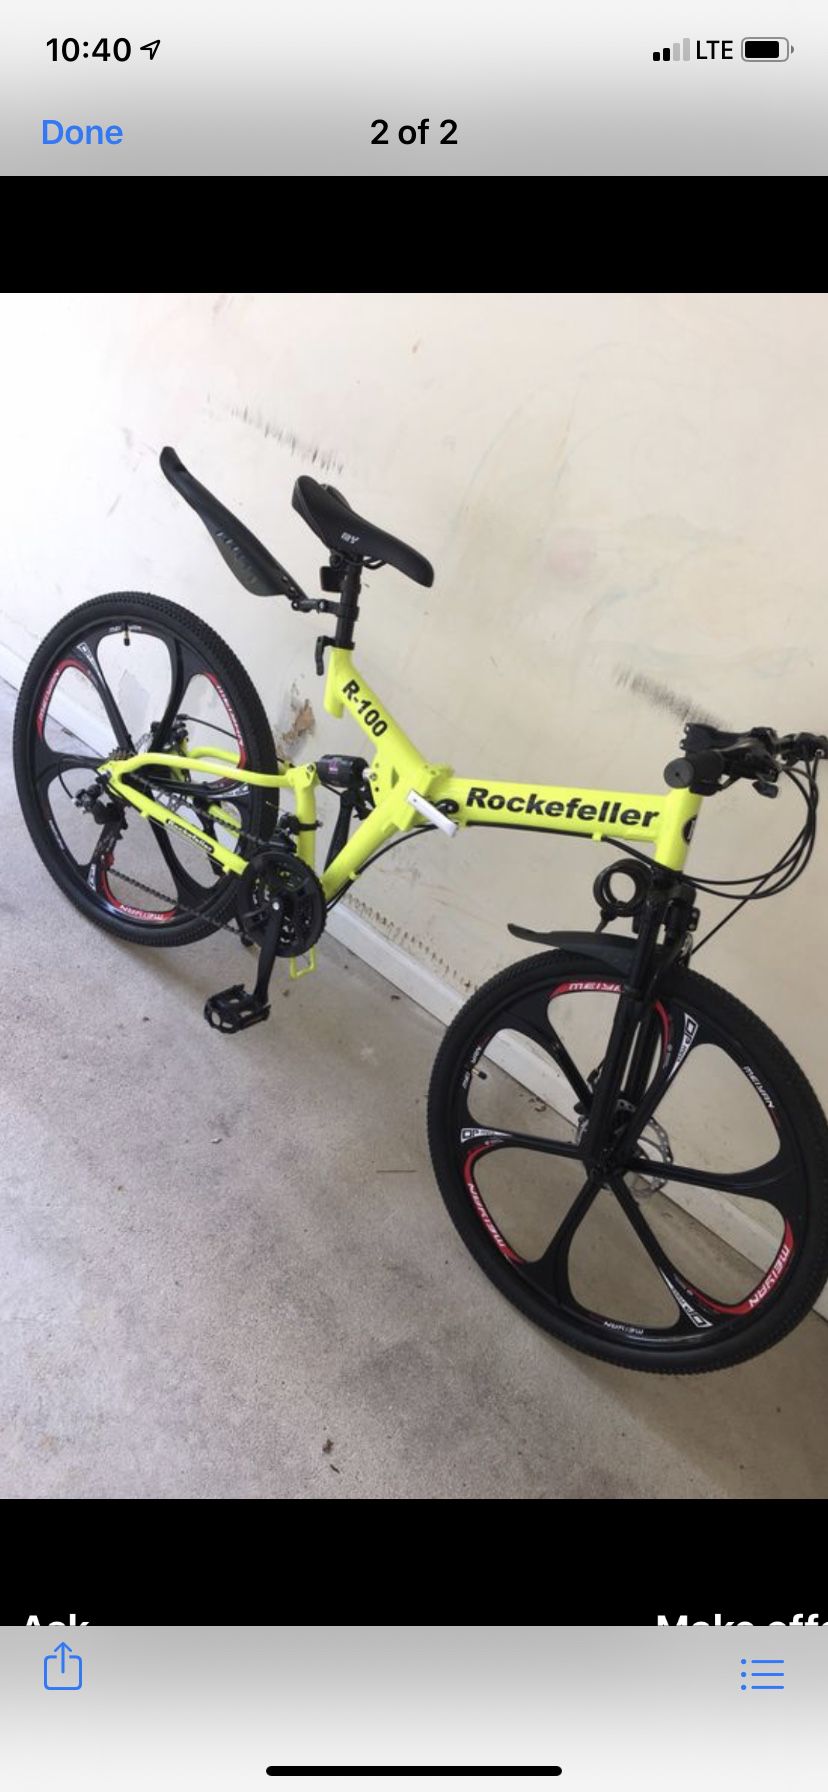 Rockefeller R-10 folding bike